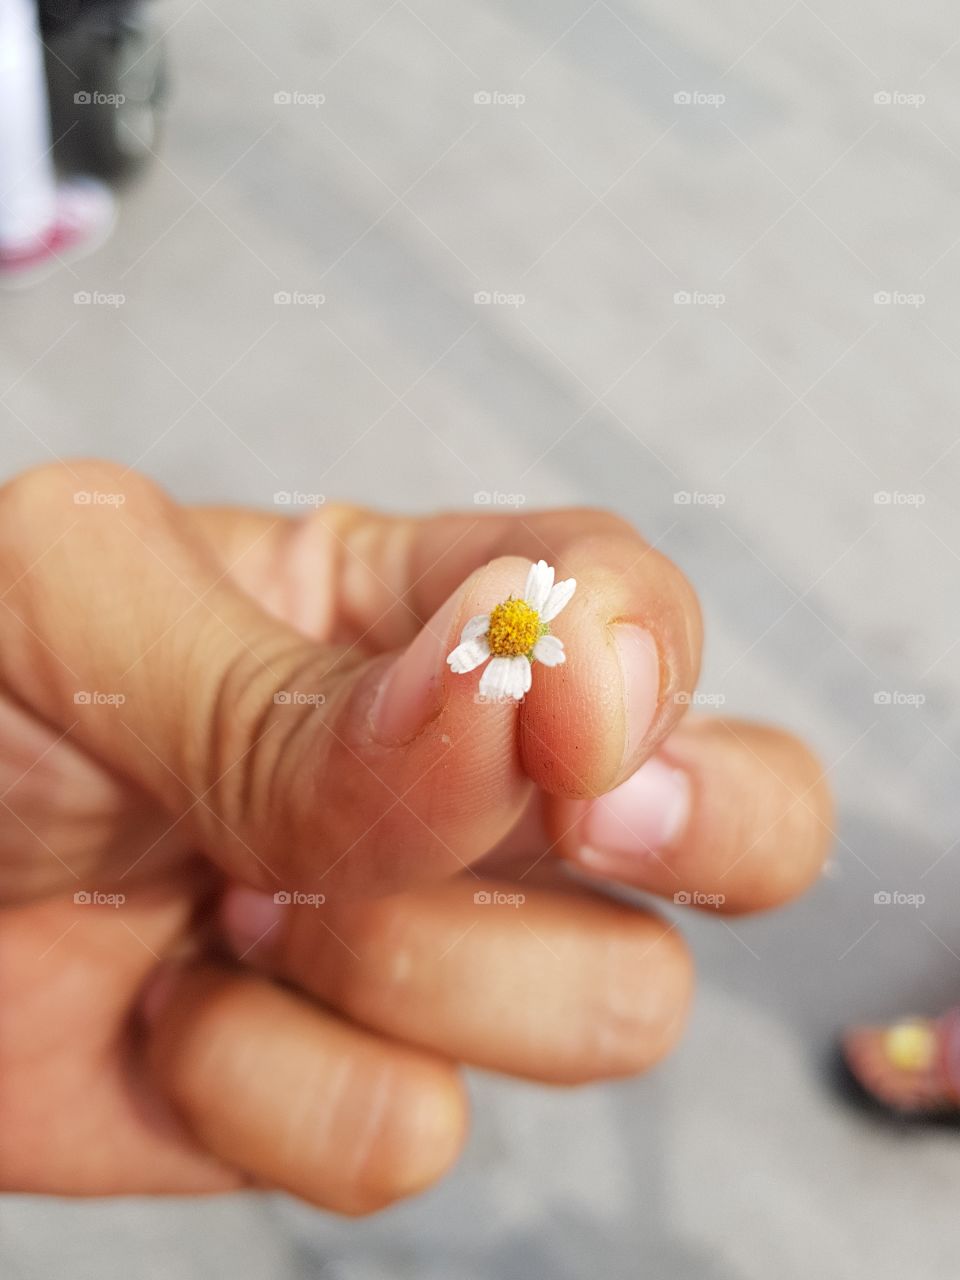 flor amarillo